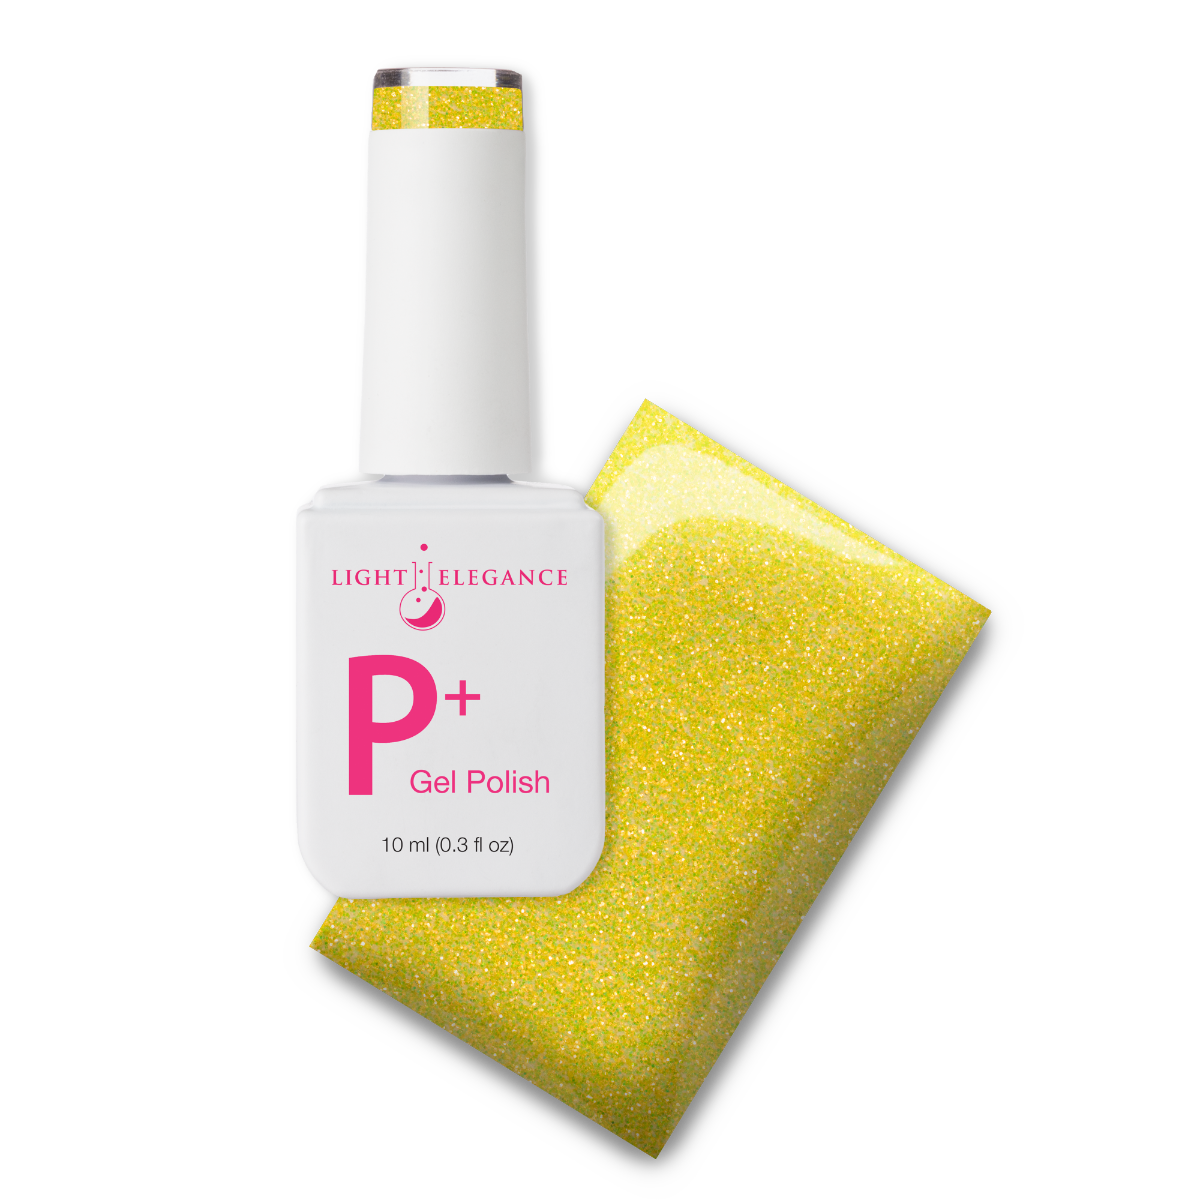 Light Elegance P+ Soak Off Glitter Gel - Good Vibrations :: New Packaging